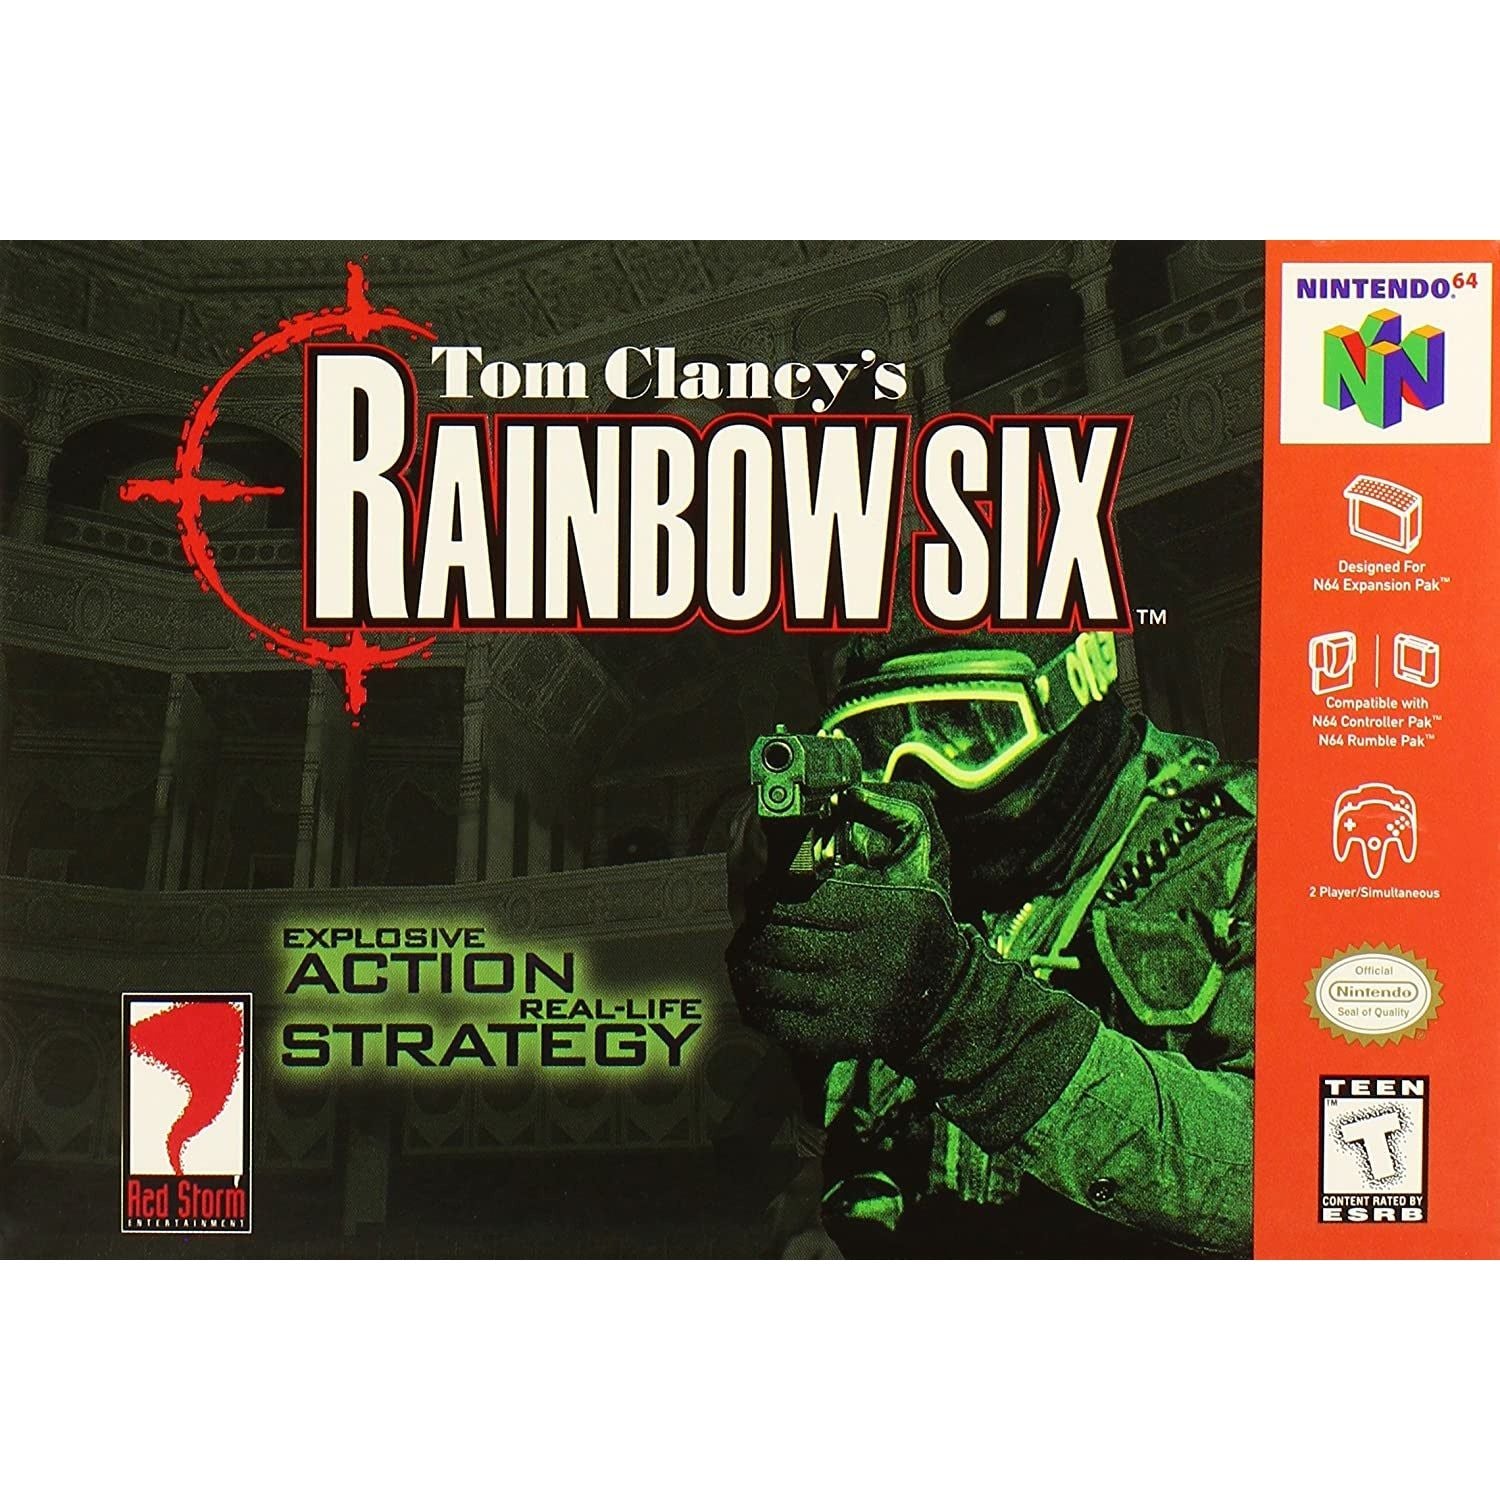 N64 - Tom Clancy's Rainbow Six (Complete in Box)